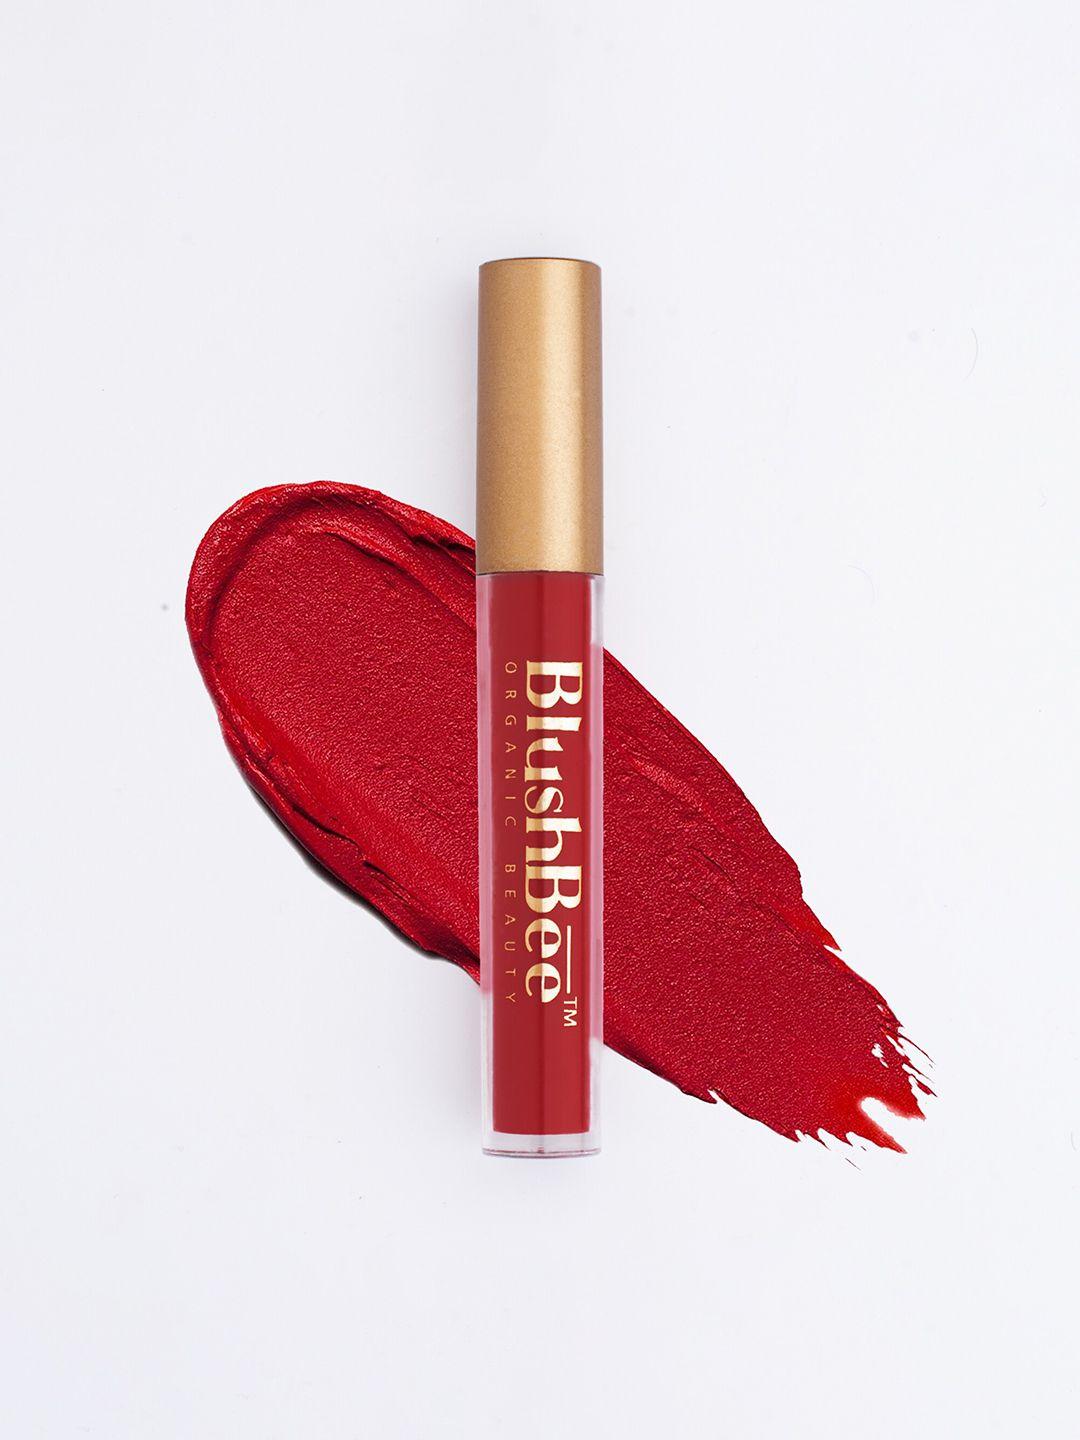 blushbee beauty highly pigmented vegan organic lip nourishing liquid lipstick 5ml - lit me